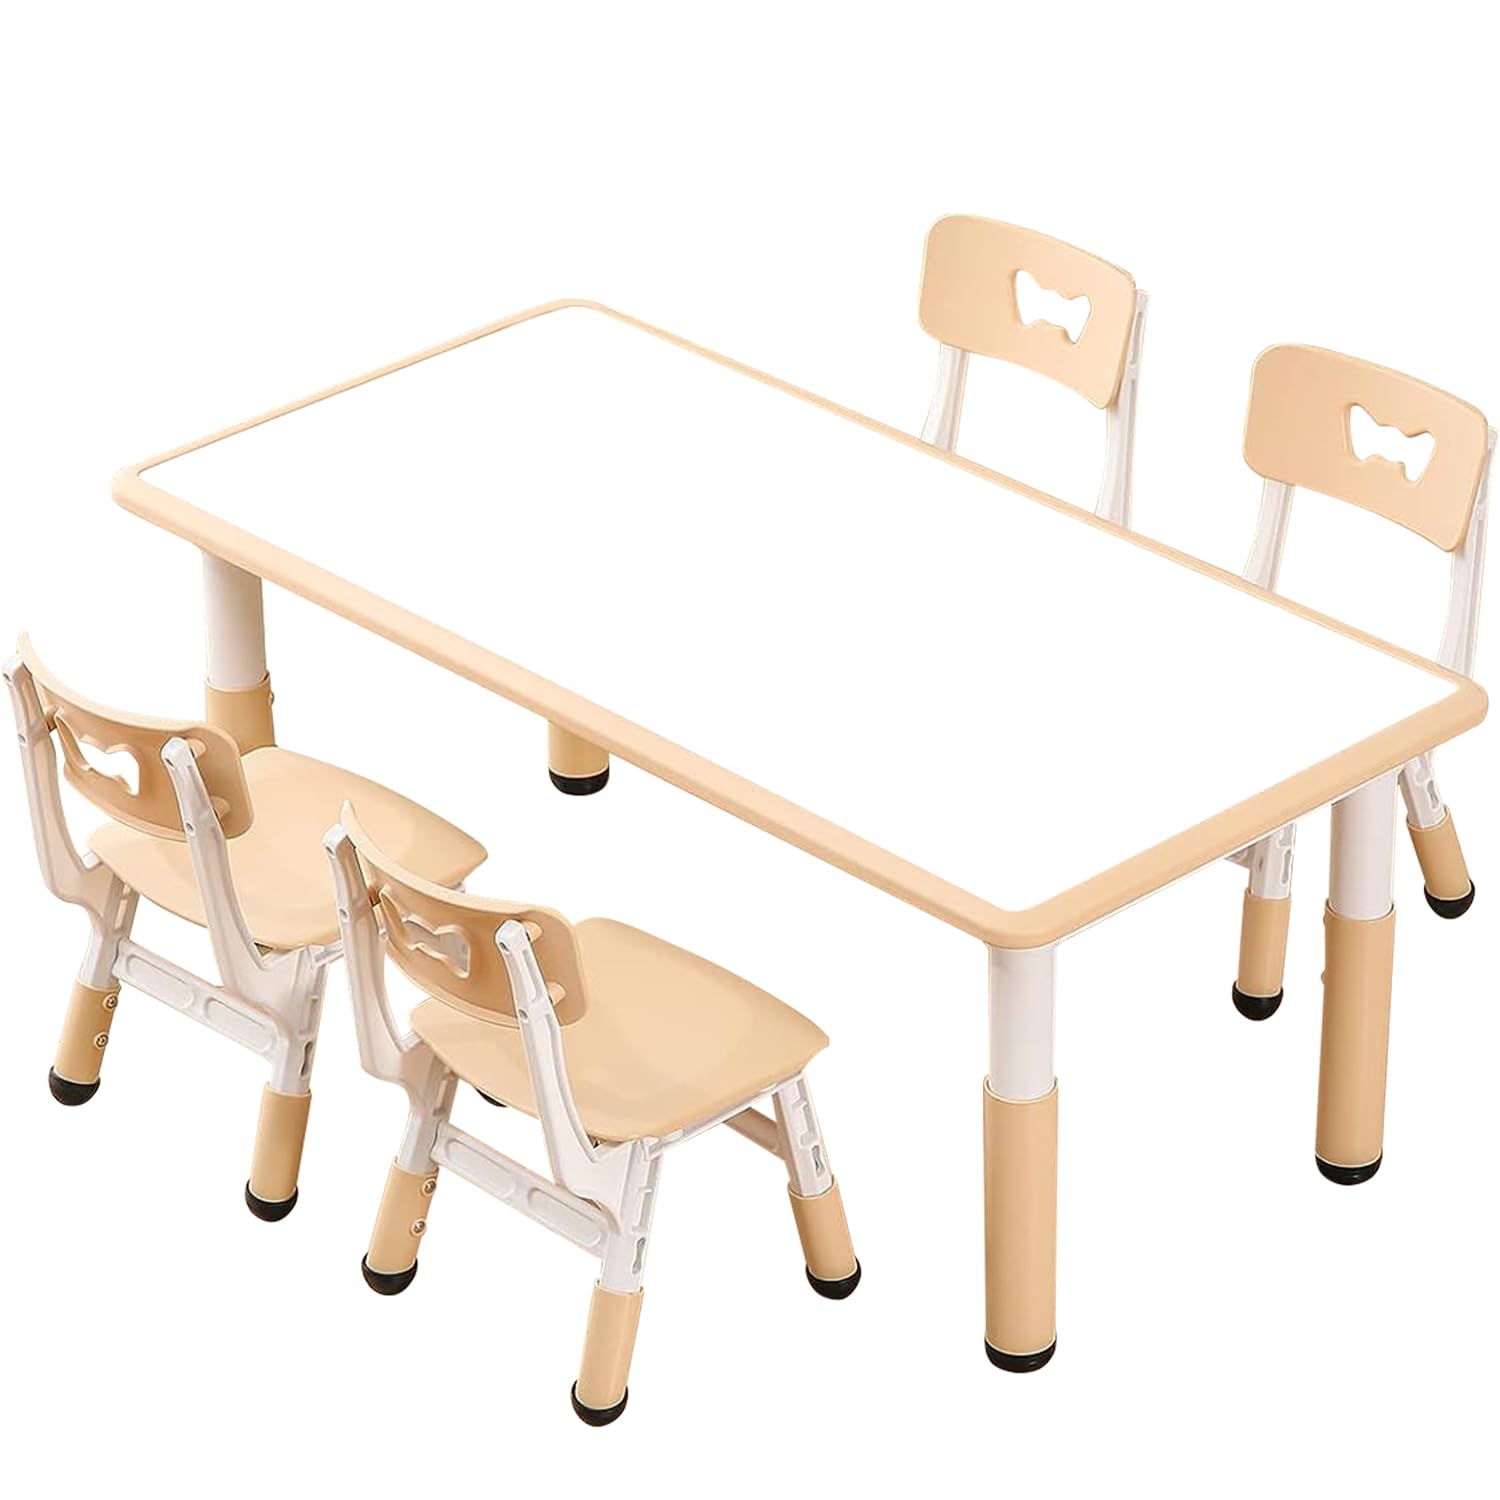 JIAOQIU Kids Table and Chairs